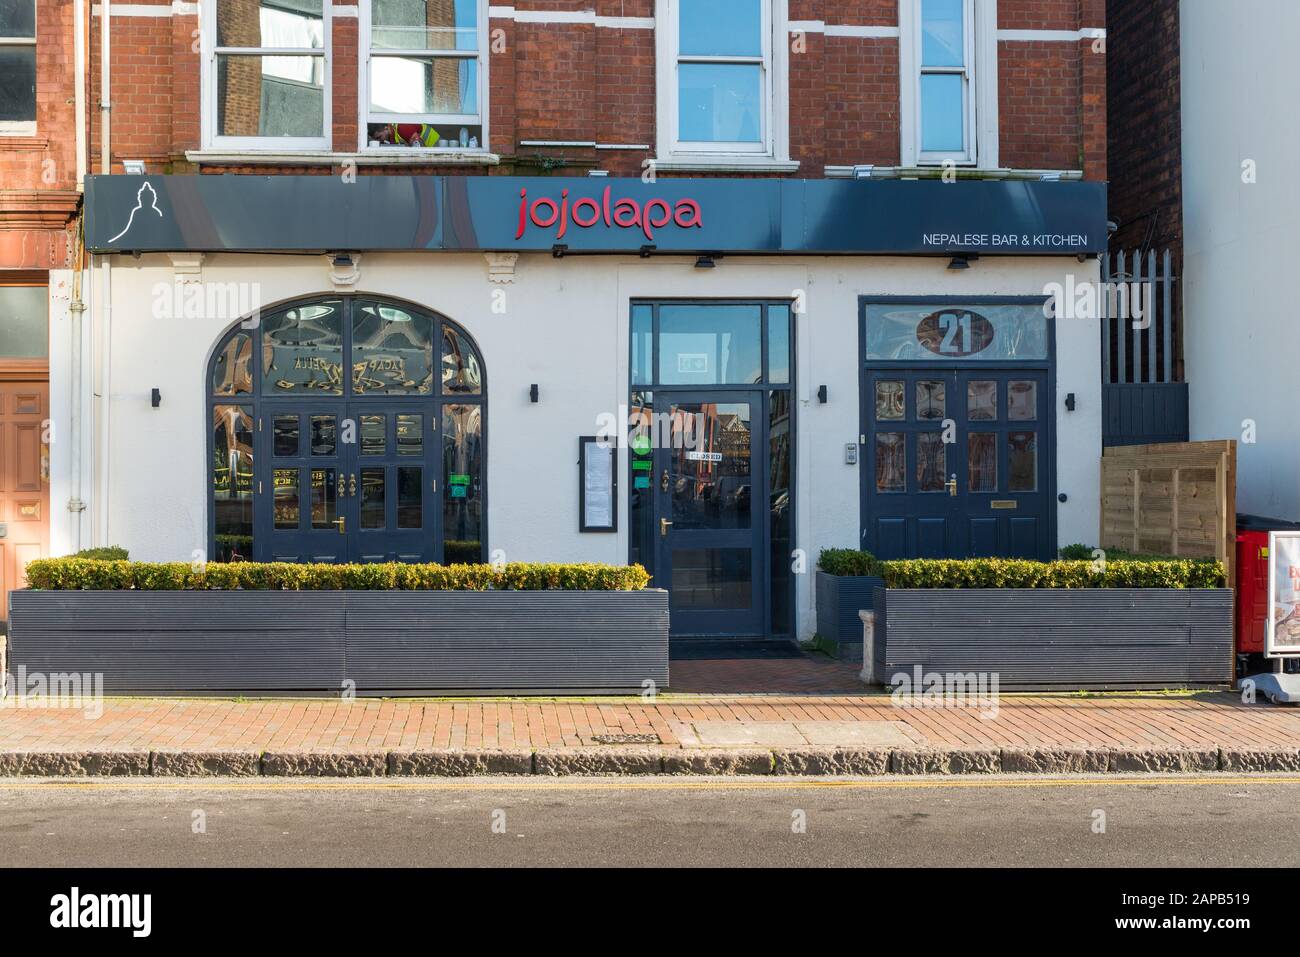 Jojolapa Nepalese bar and restaurant in birmingham's Jewellery Quarter, Hockley, Birmingham, UK Stock Photo